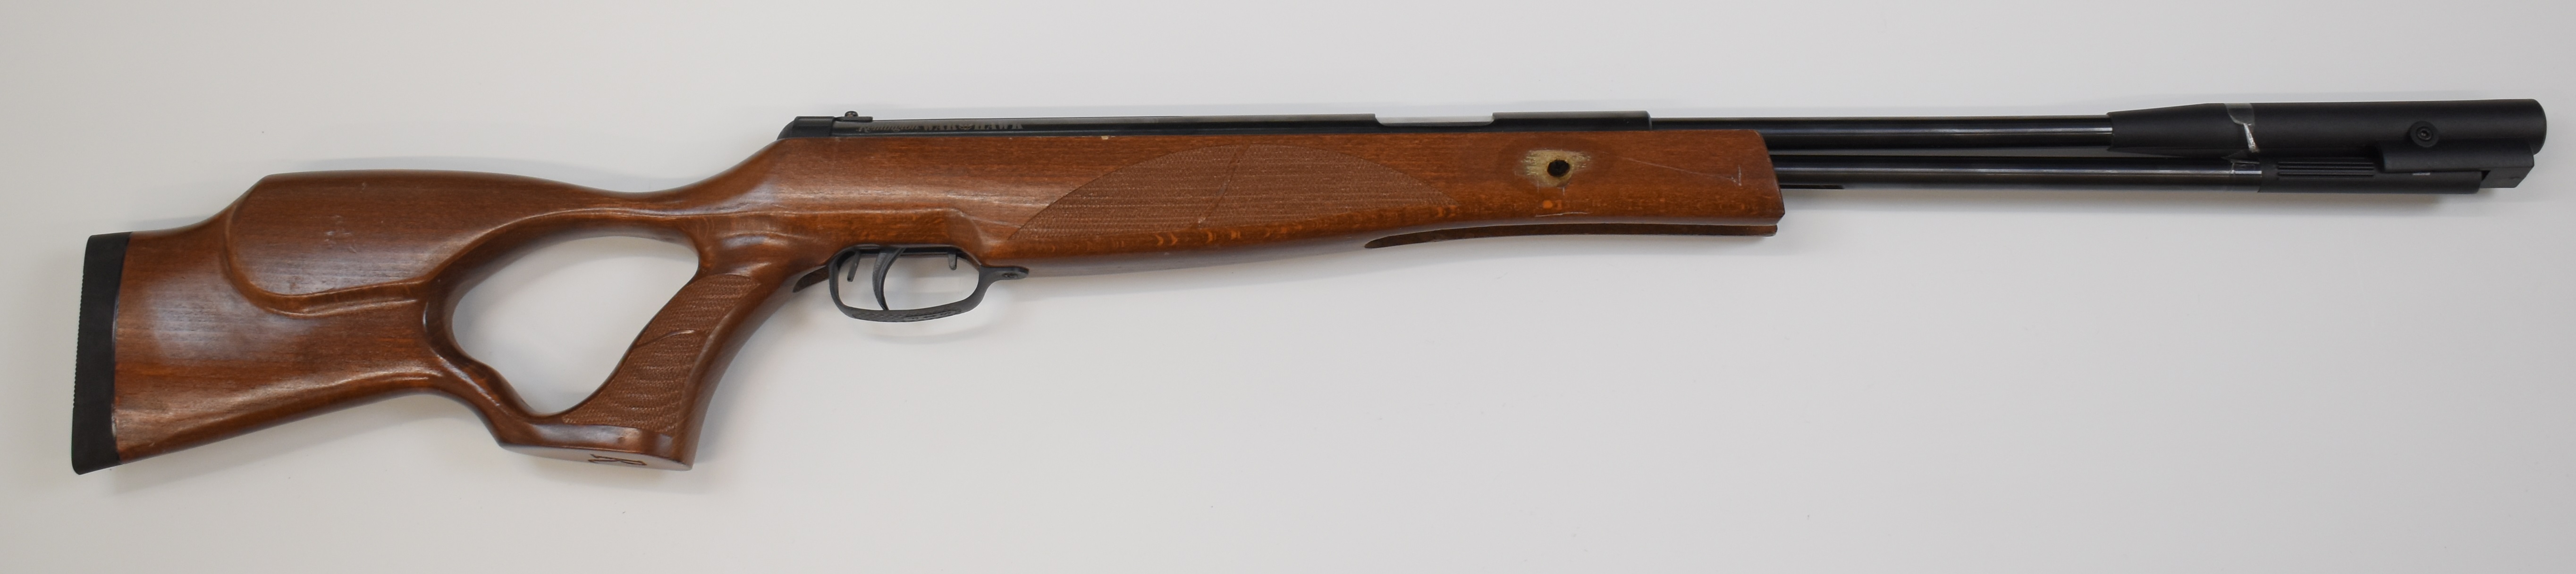 Remington Warhawk .177 under-lever air rifle with textured semi-pistol grip, raised cheek piece - Image 2 of 11